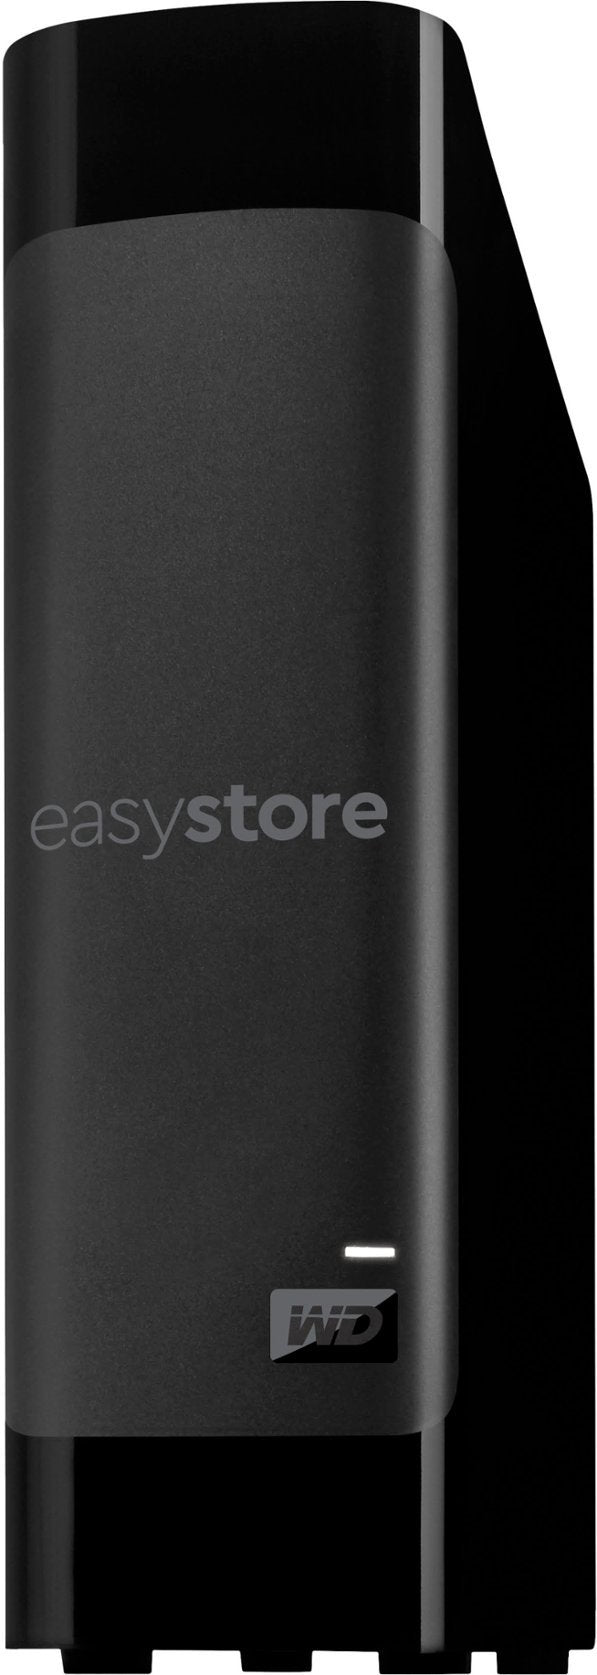 IN STOCK! WD Easystore 20TB External USB 3.0 Hard Drive (Black) WDBAMA0200HBK-NESN